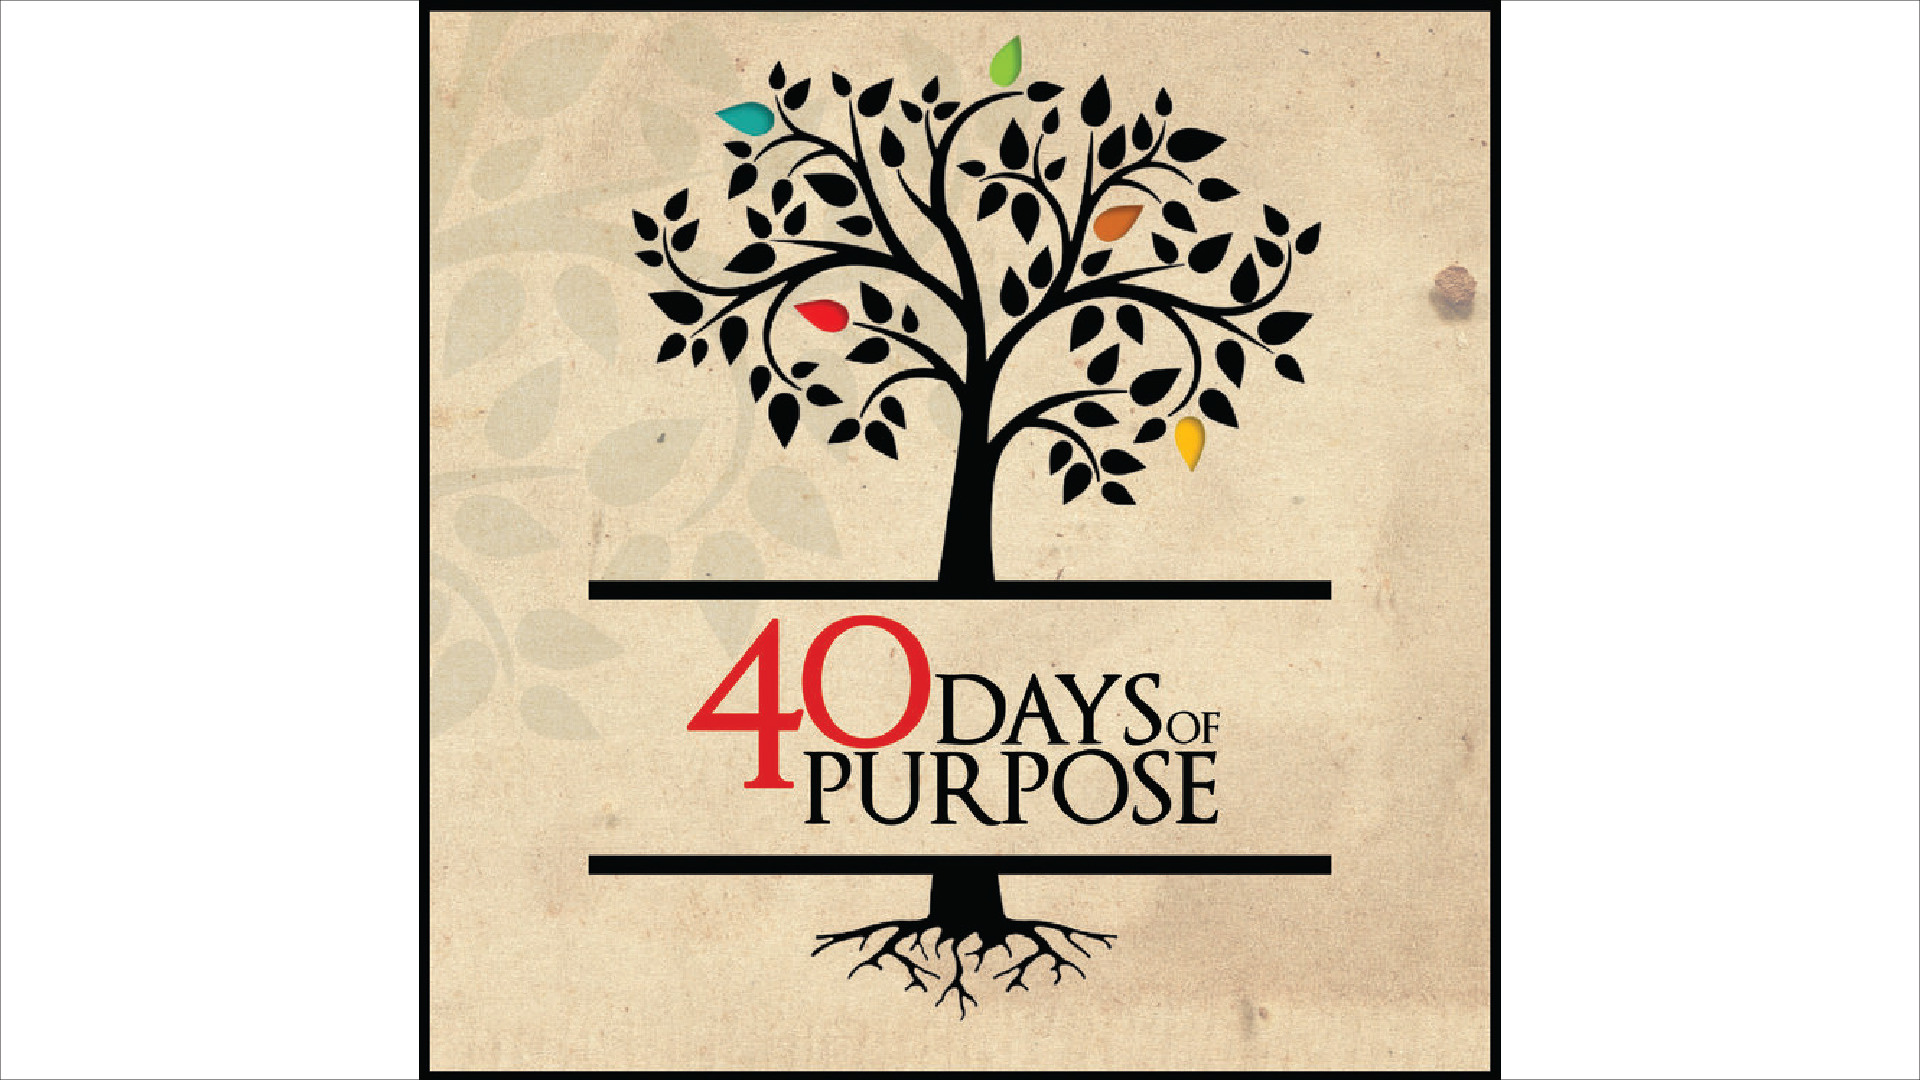 Purpose Two: To Fellowship